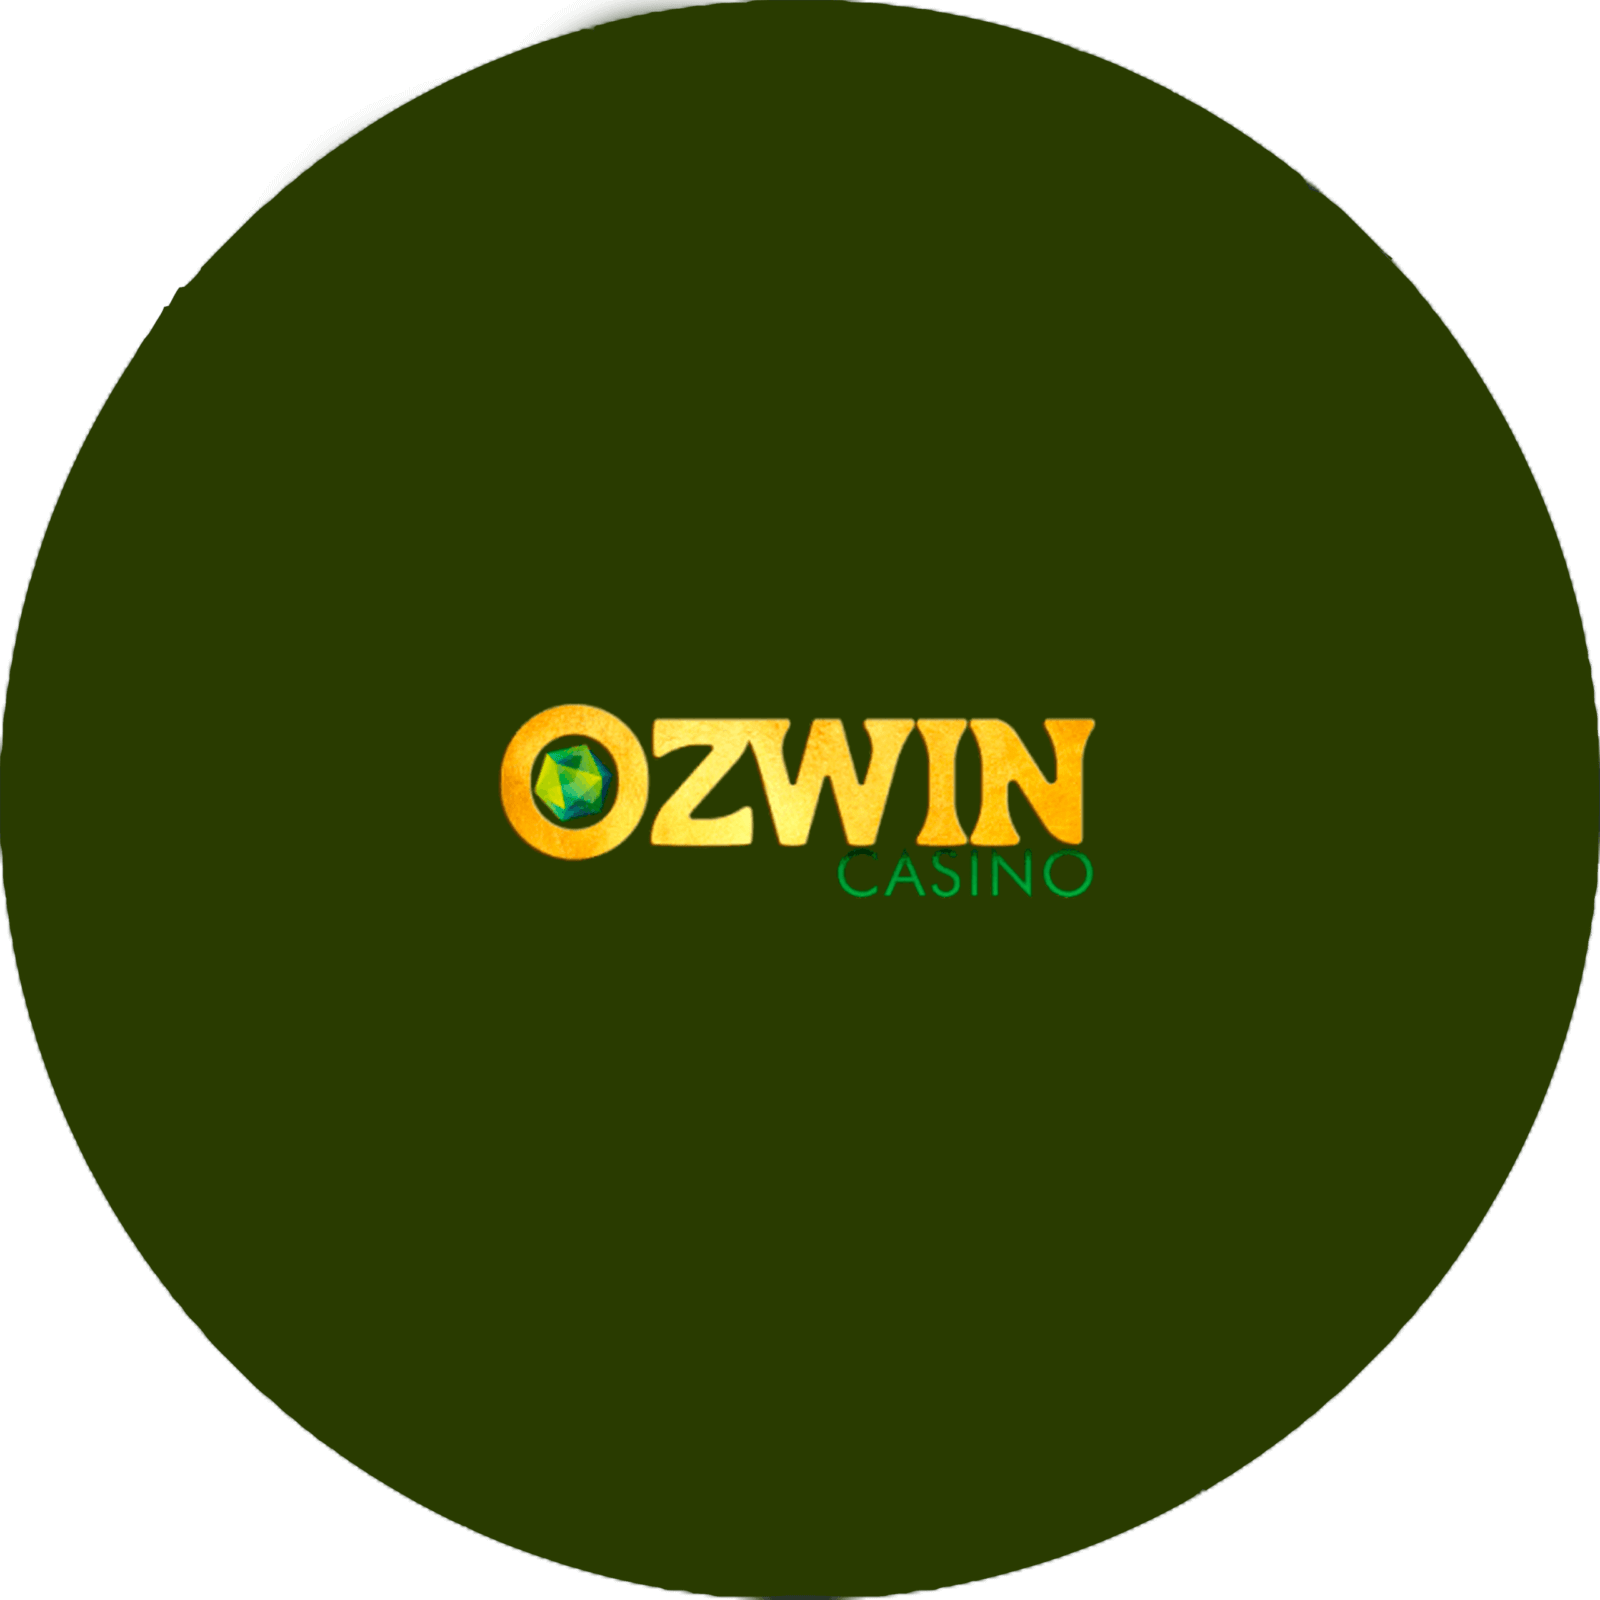 Owin-Casino